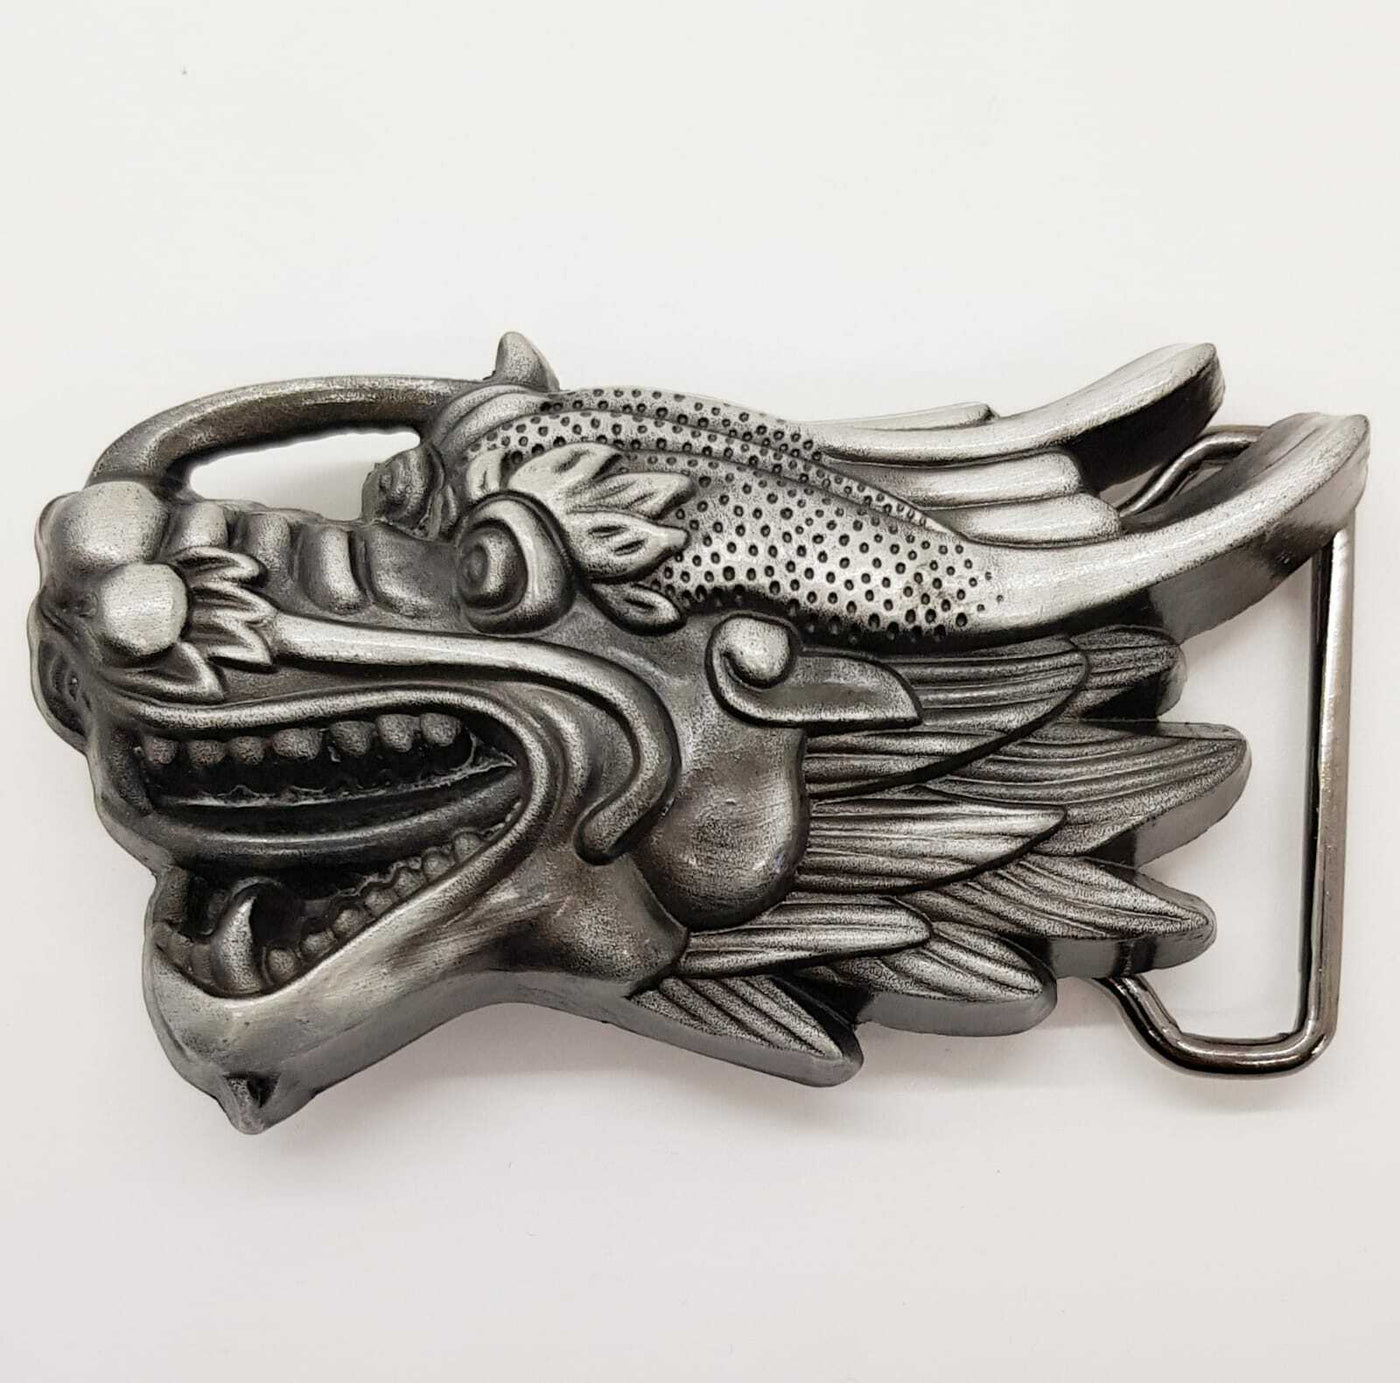 Chinese Dragon Head Belt Buckle - Chrome